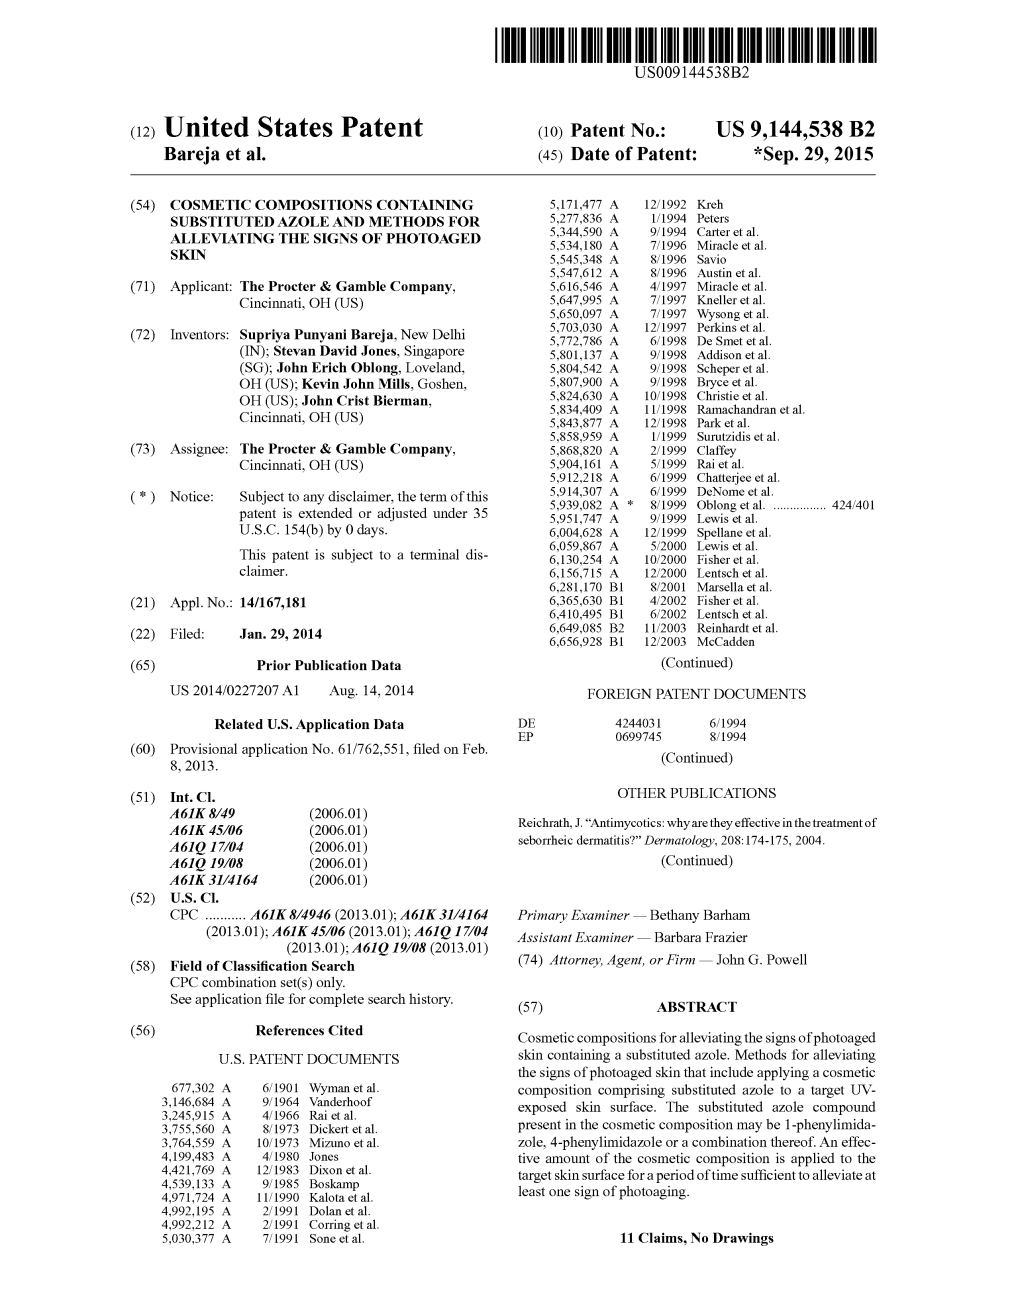 (12) United States Patent (10) Patent No.: US 9,144,538 B2 Bareja Et Al